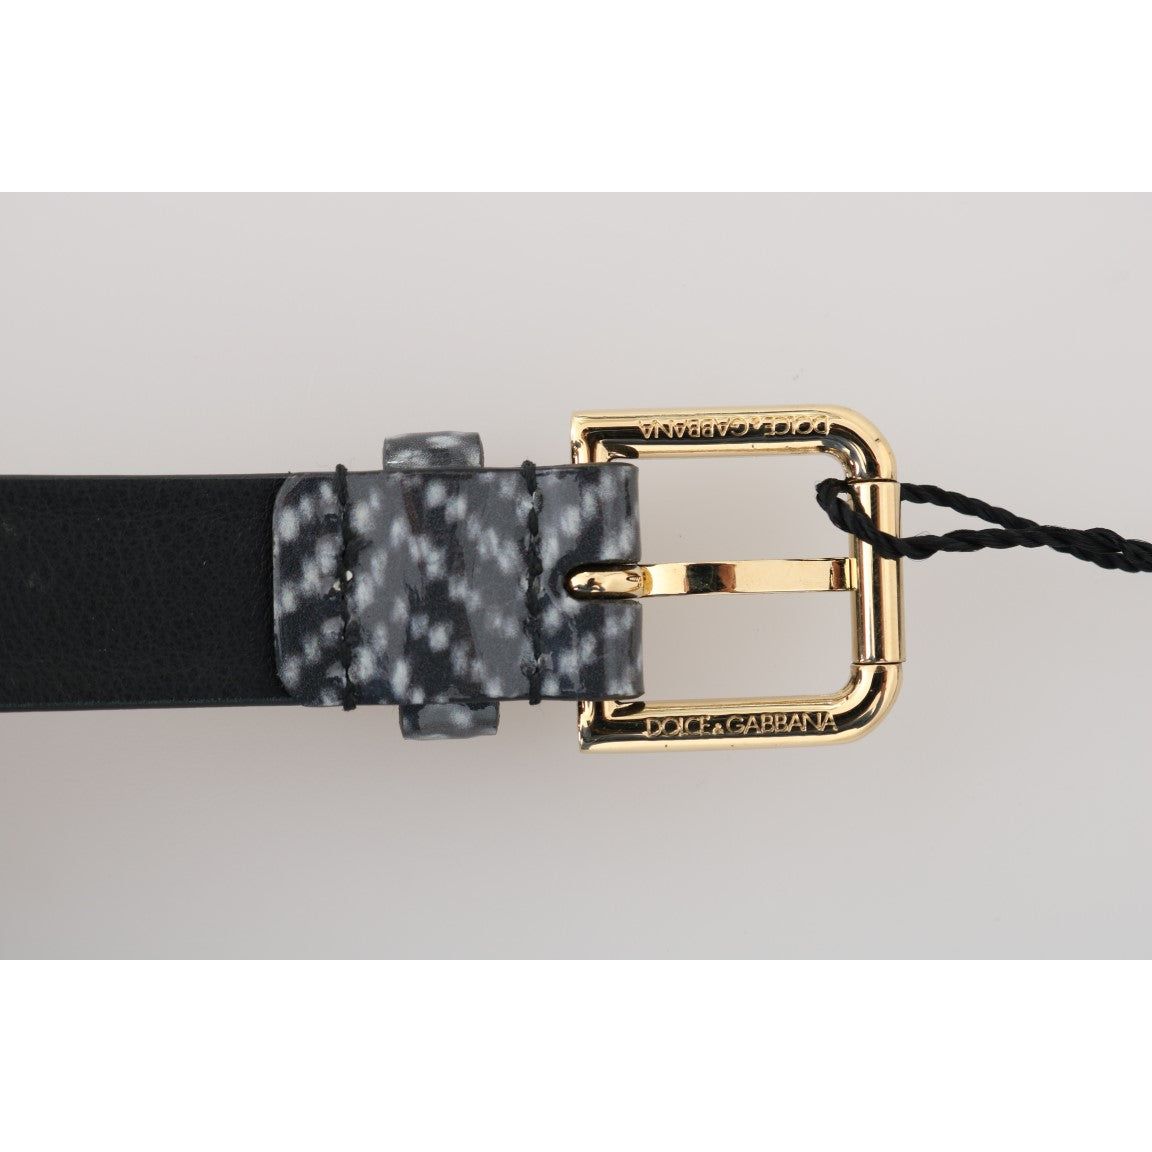 Dolce & Gabbana Elegant Chevron Leather Waist Belt Belt black-white-chevron-pattern-leather-belt 496158-black-white-chevron-pattern-leather-belt-4.jpg